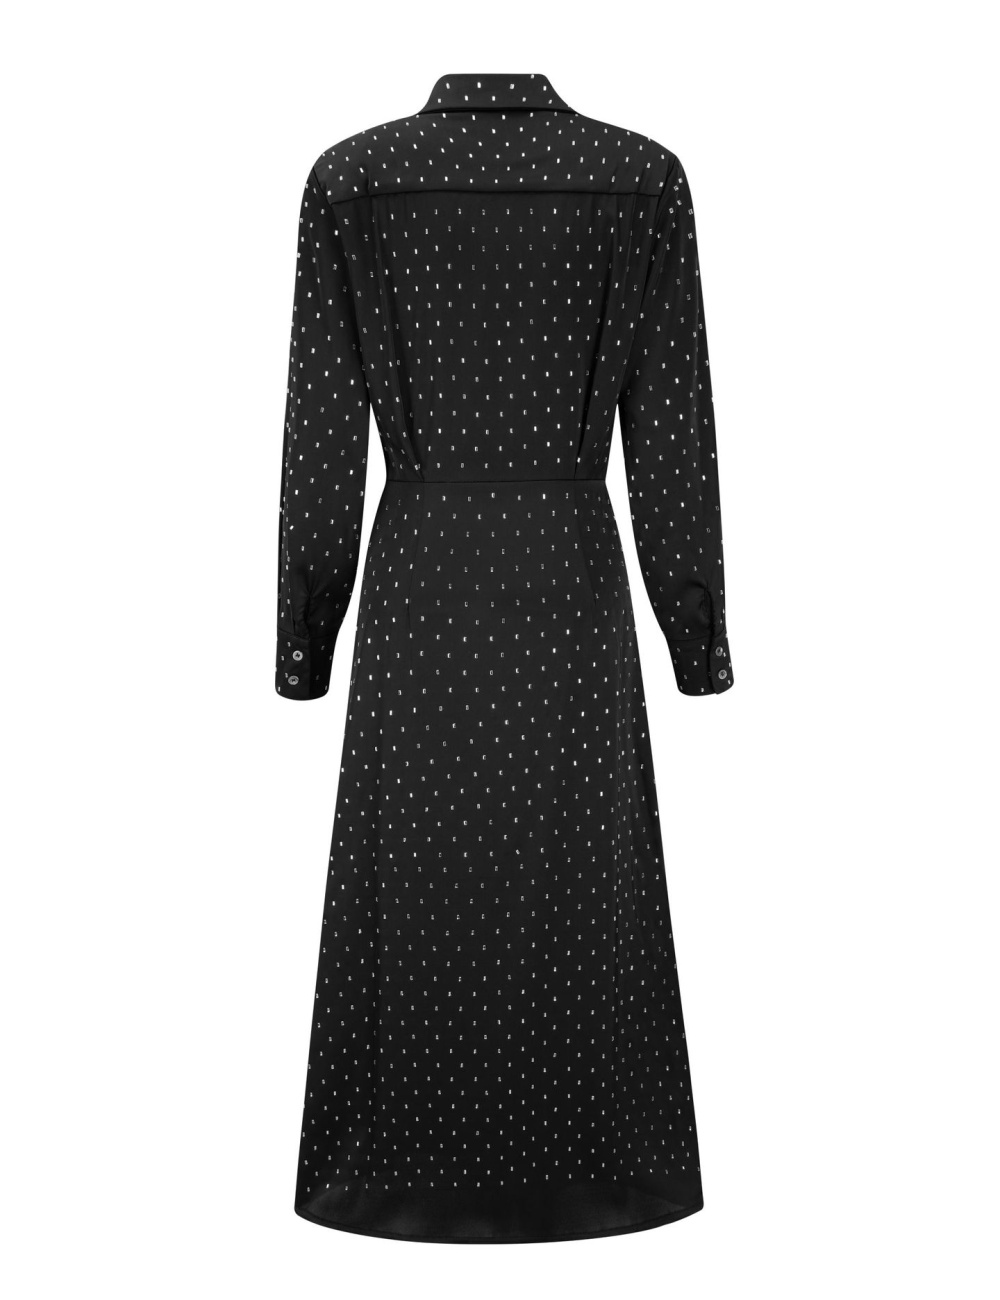 Bow black rhinestone dress A-line long sleeve long dress